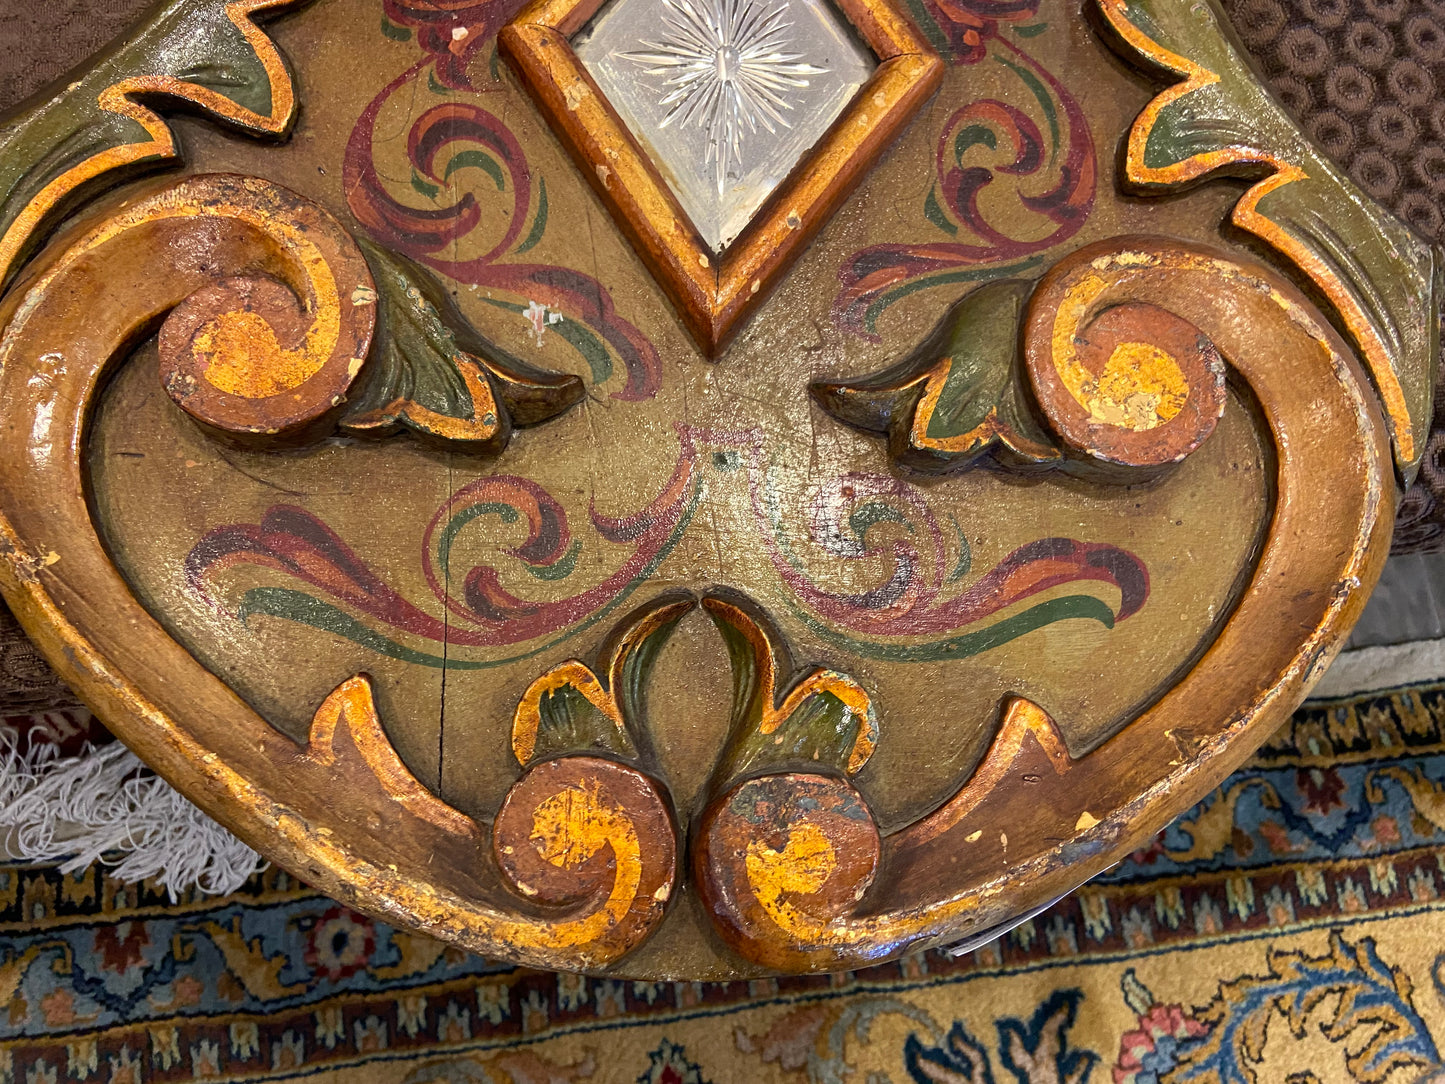 Antique Carousel Panel (25255)